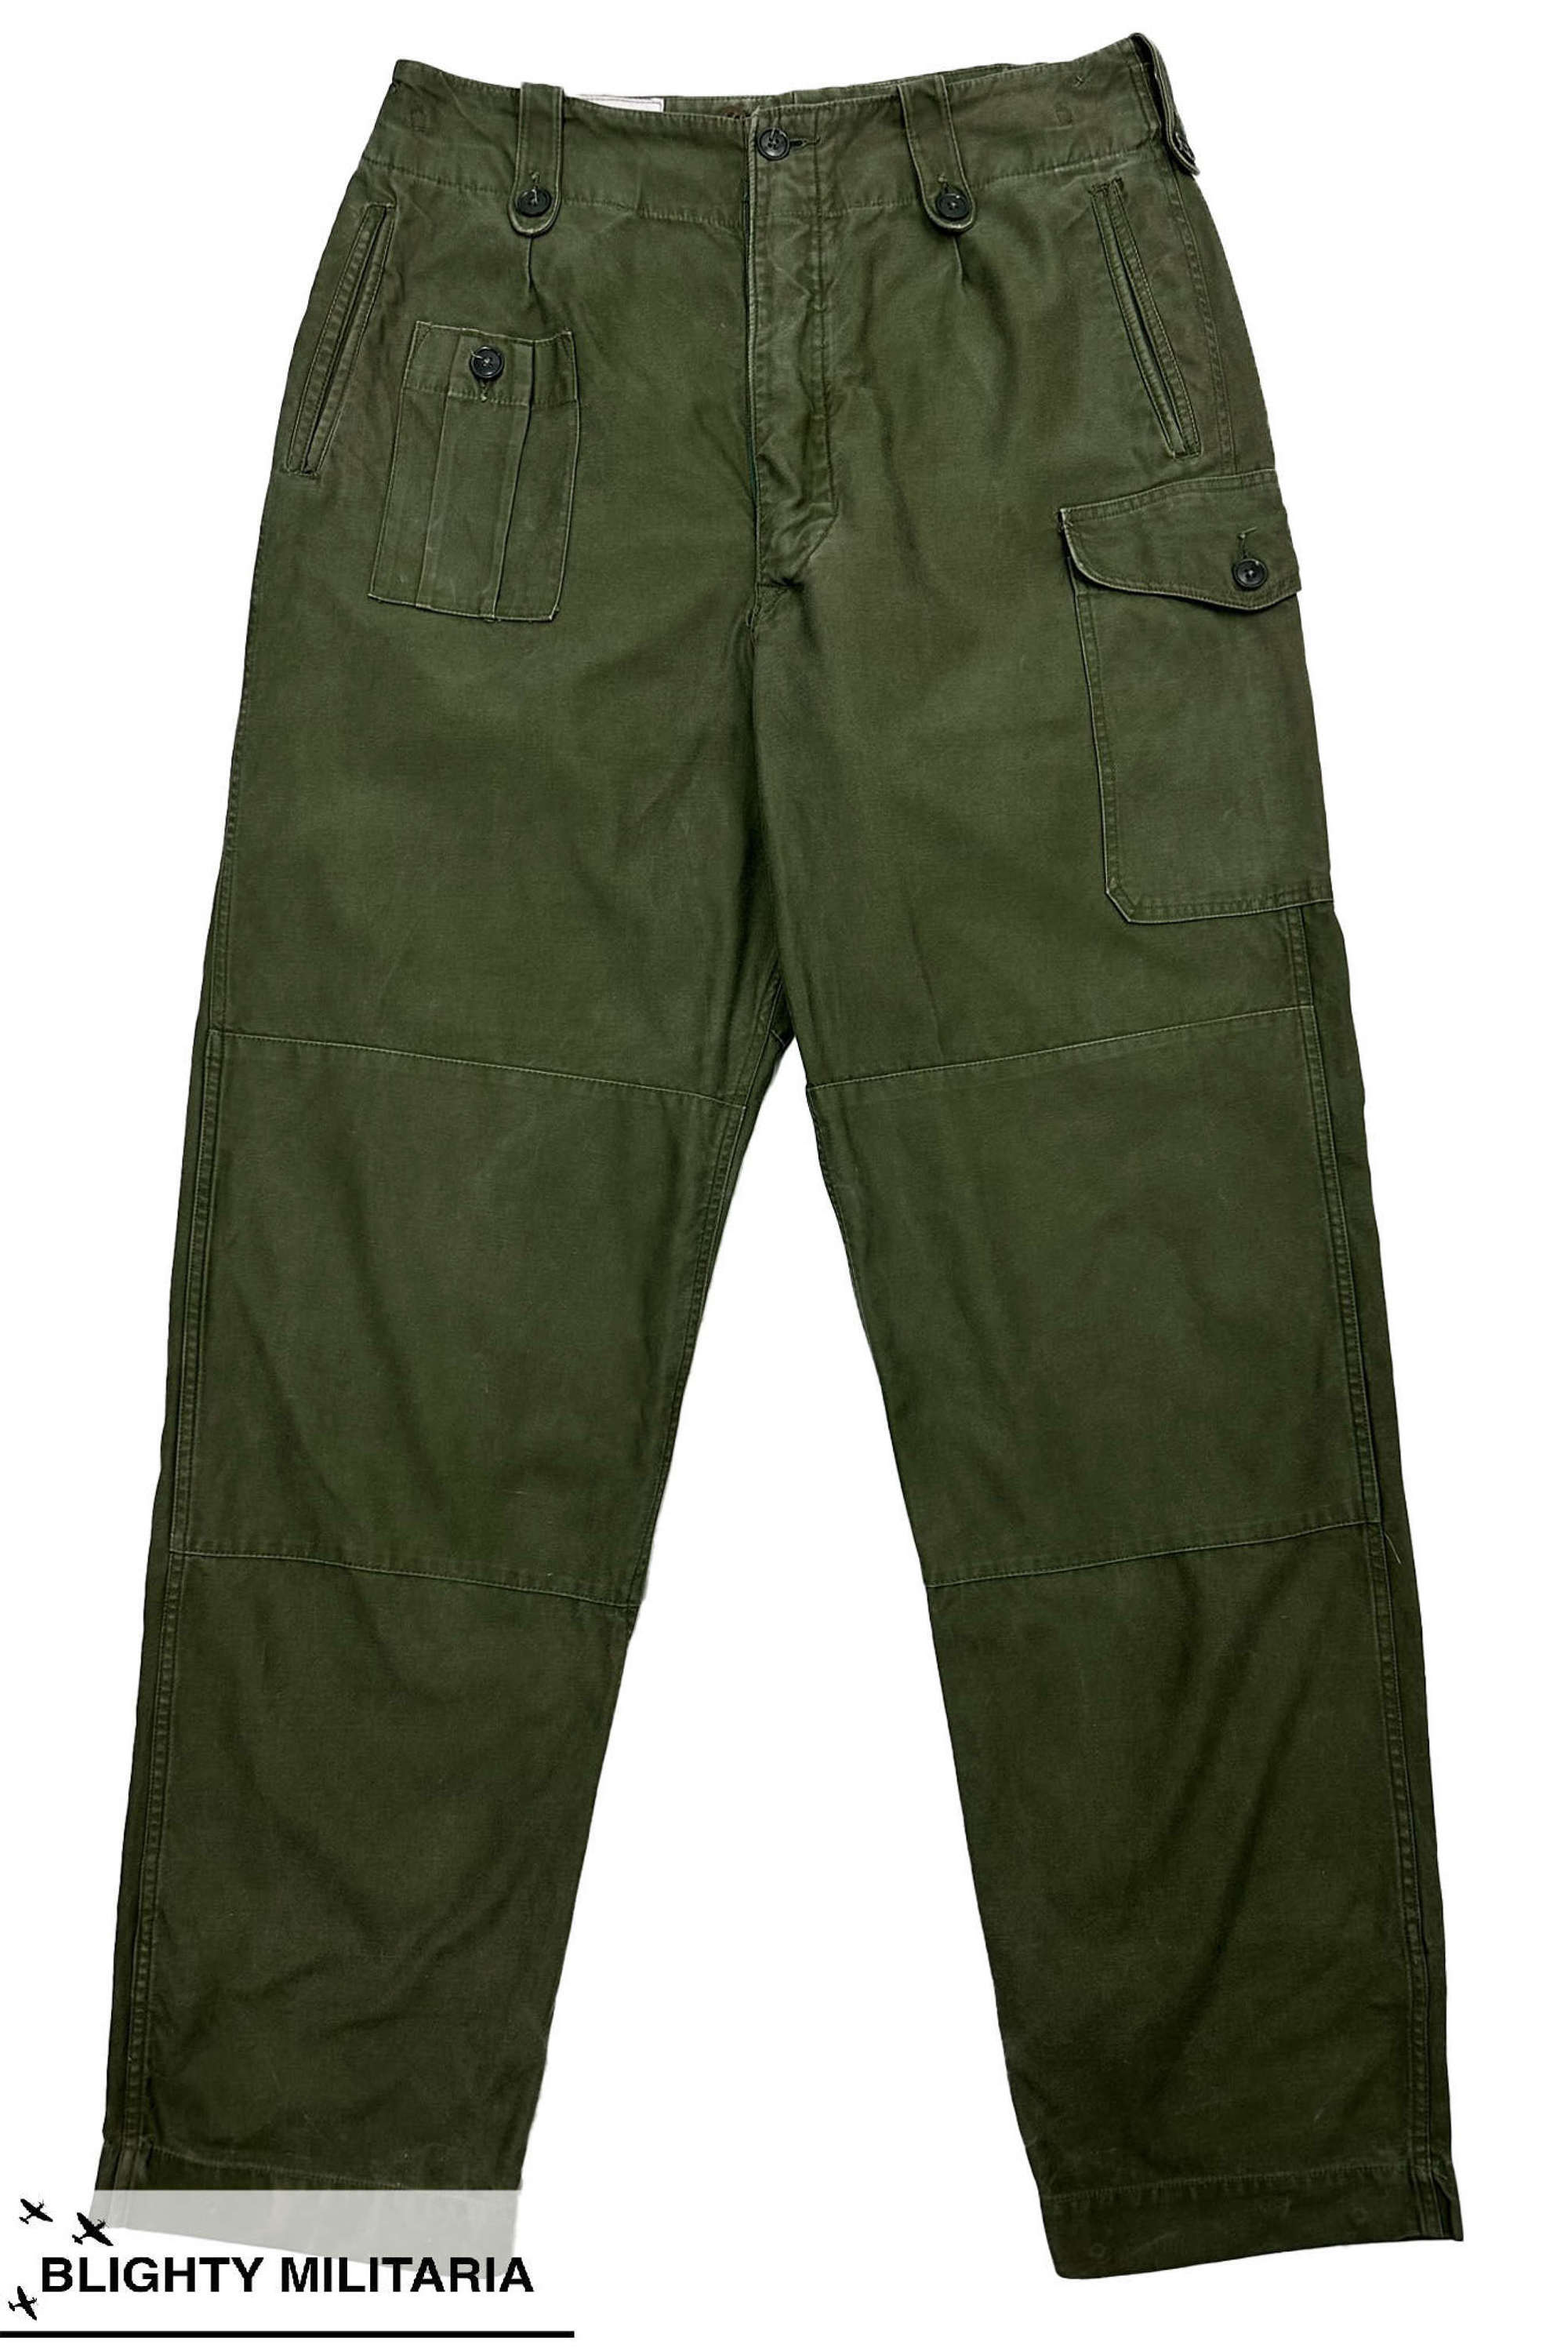 Original Late 1960s British Army 1960 Pattern Combat Trousers - Size 8